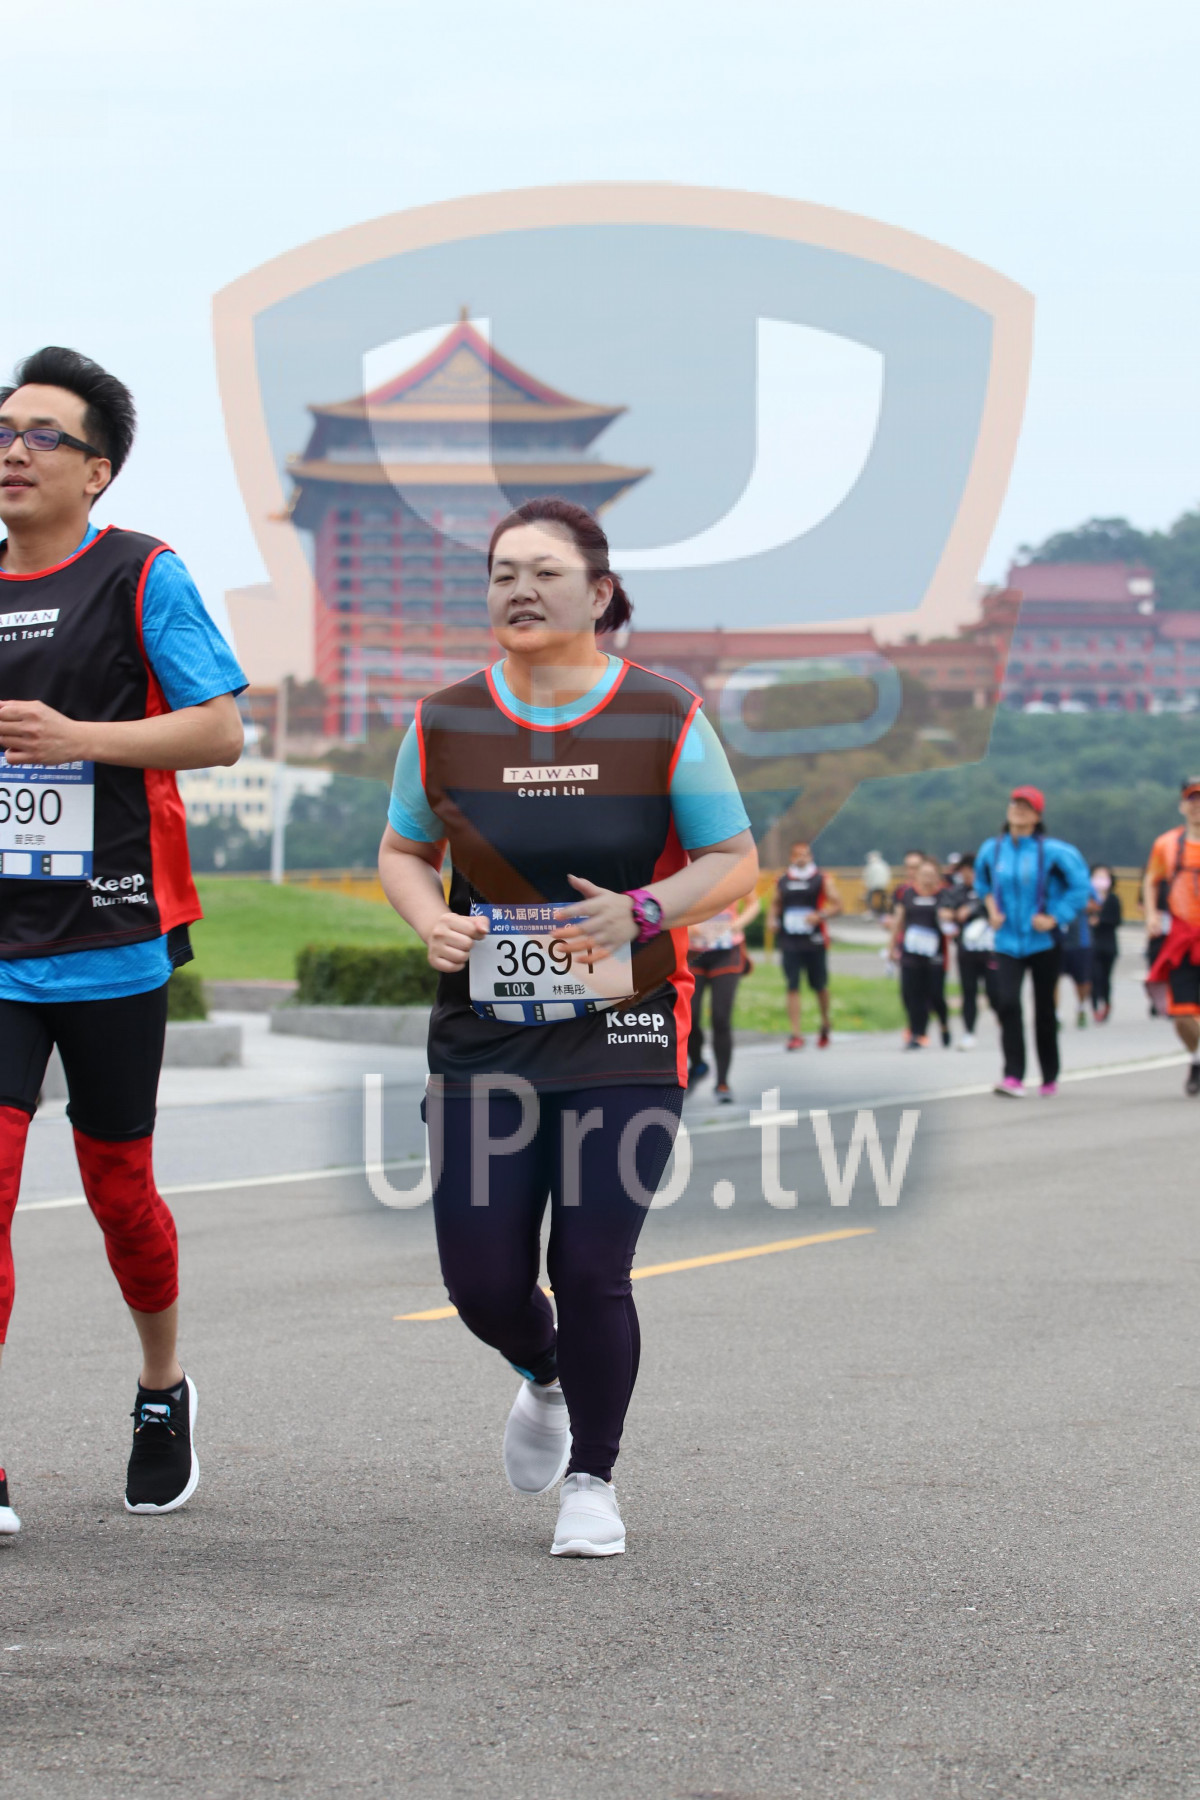 ret,TserE,690,Keep,Running,,369%,10K|2018 第九屆阿甘盃公益路跑|Soryu Asuka Langley